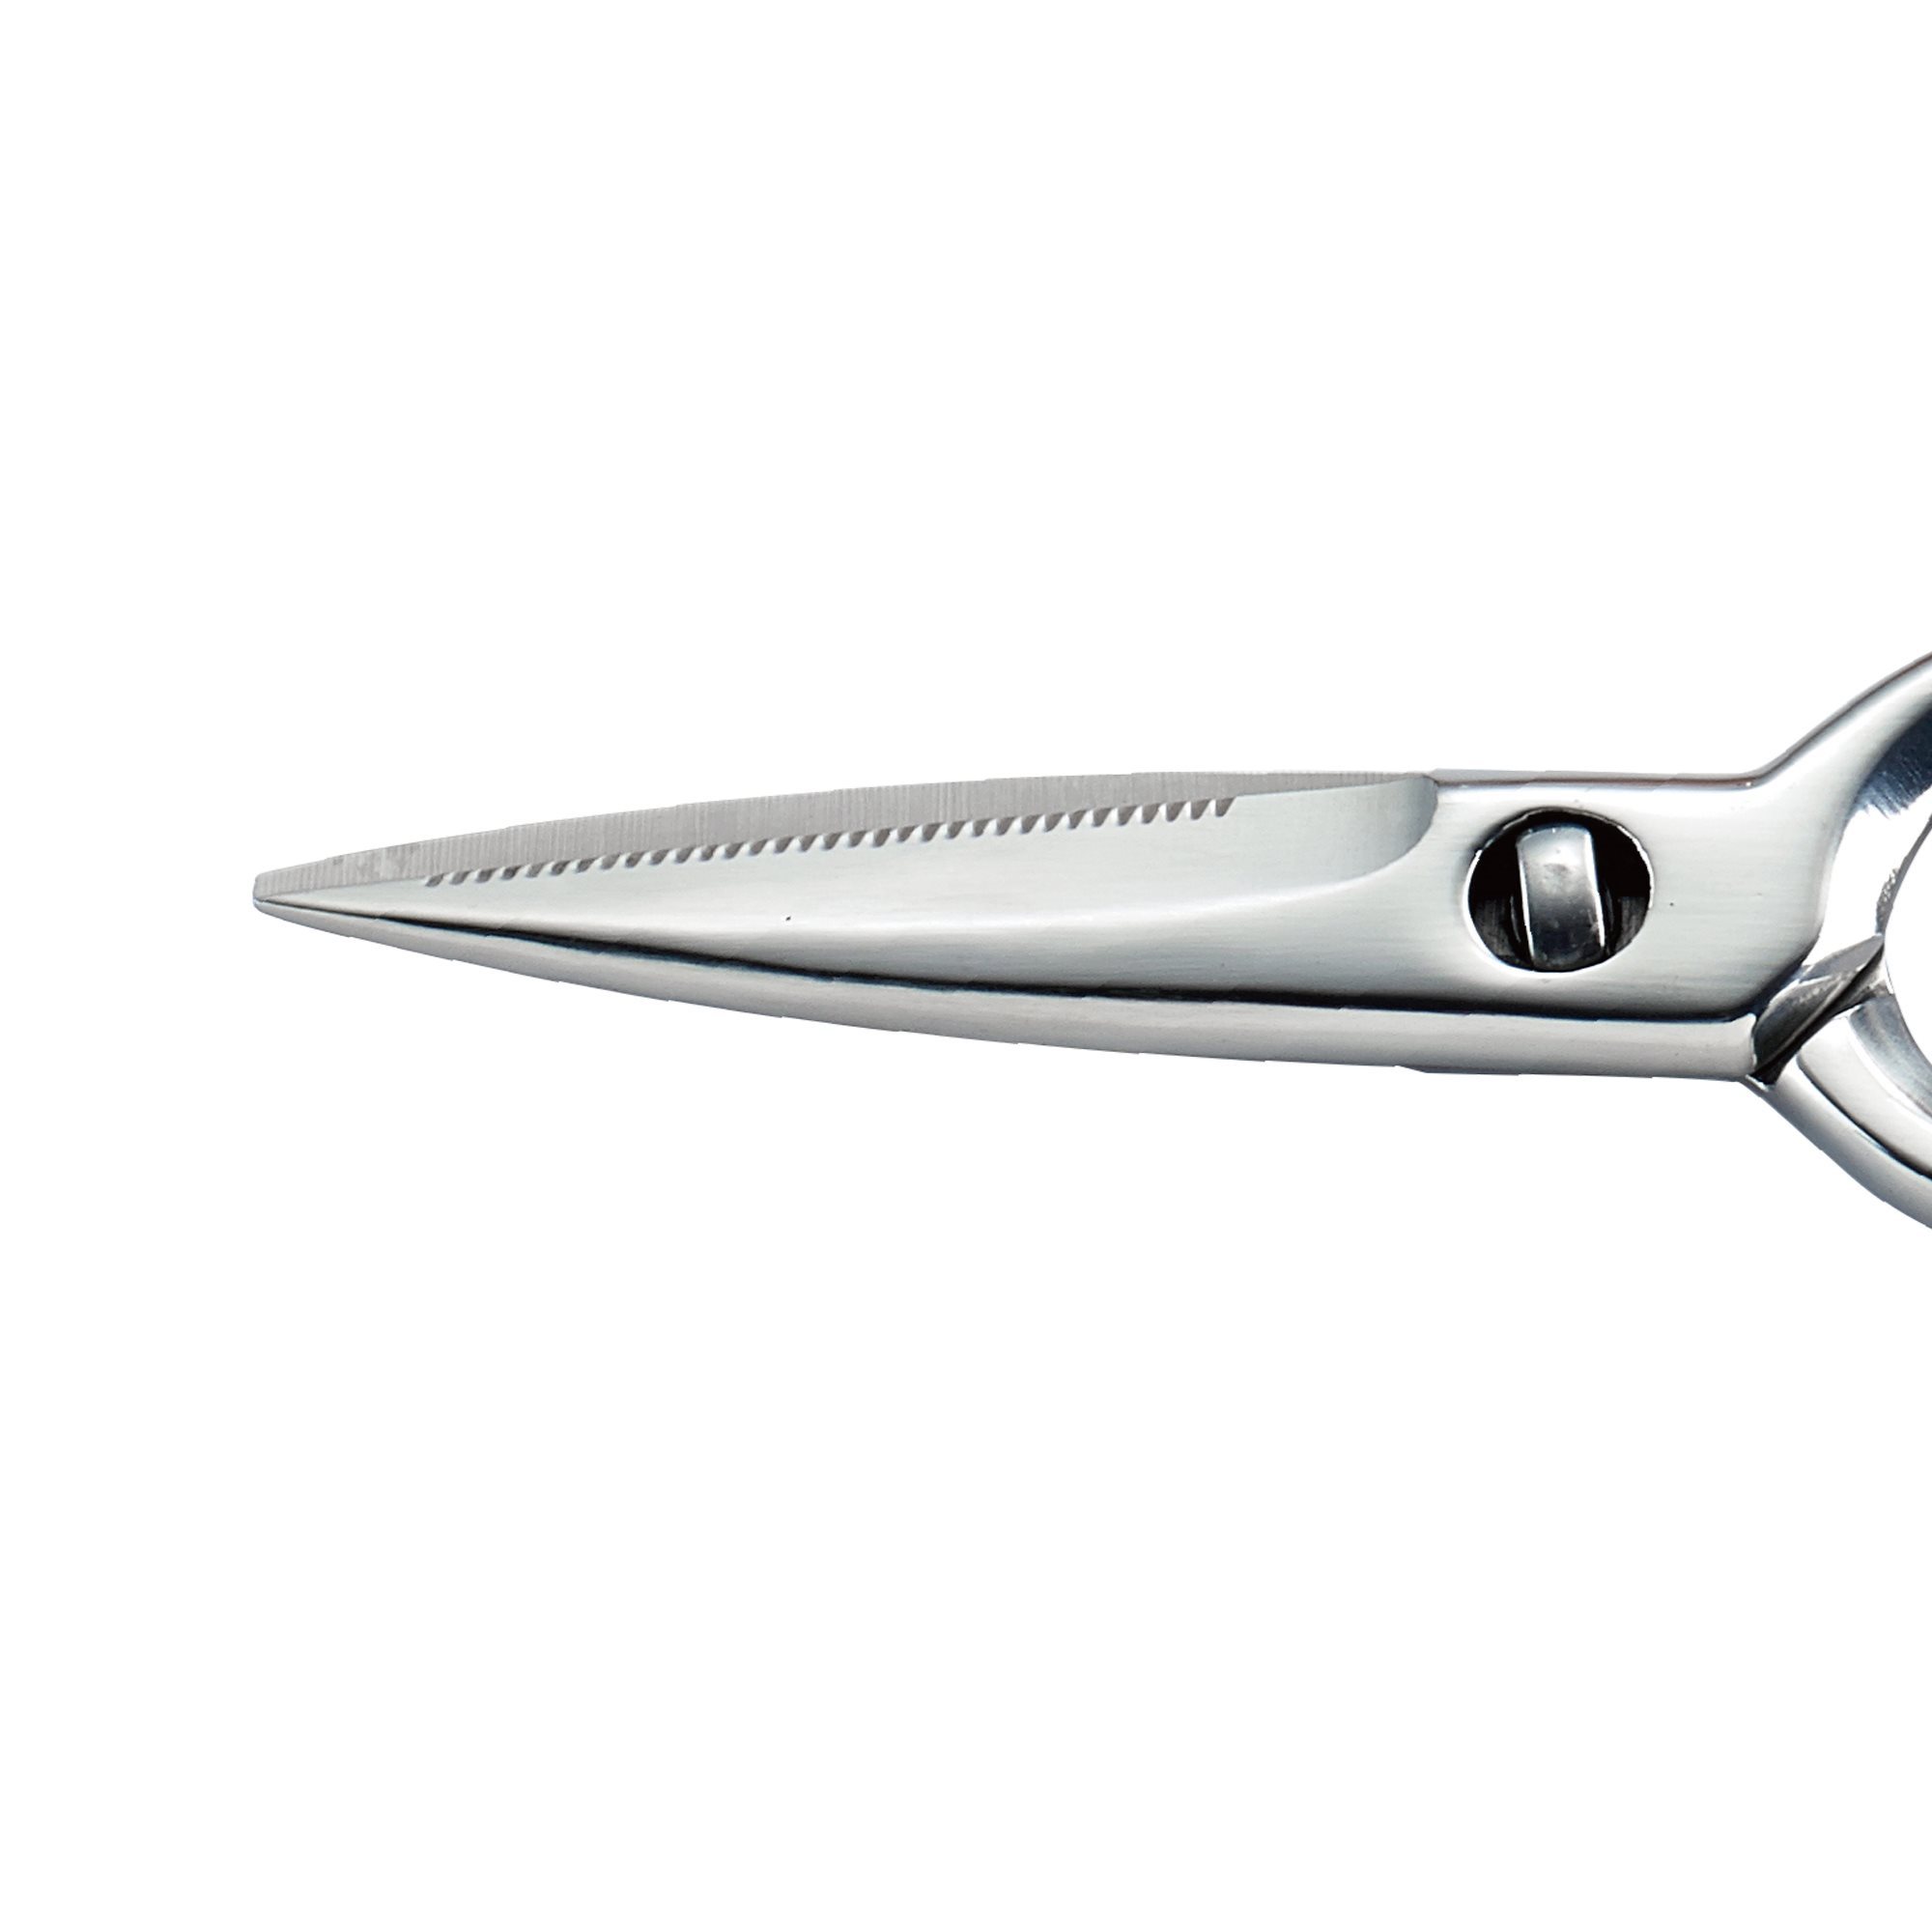 Multipurpose scissors, stainless steel, 23cm, Black - KitchenAid brand